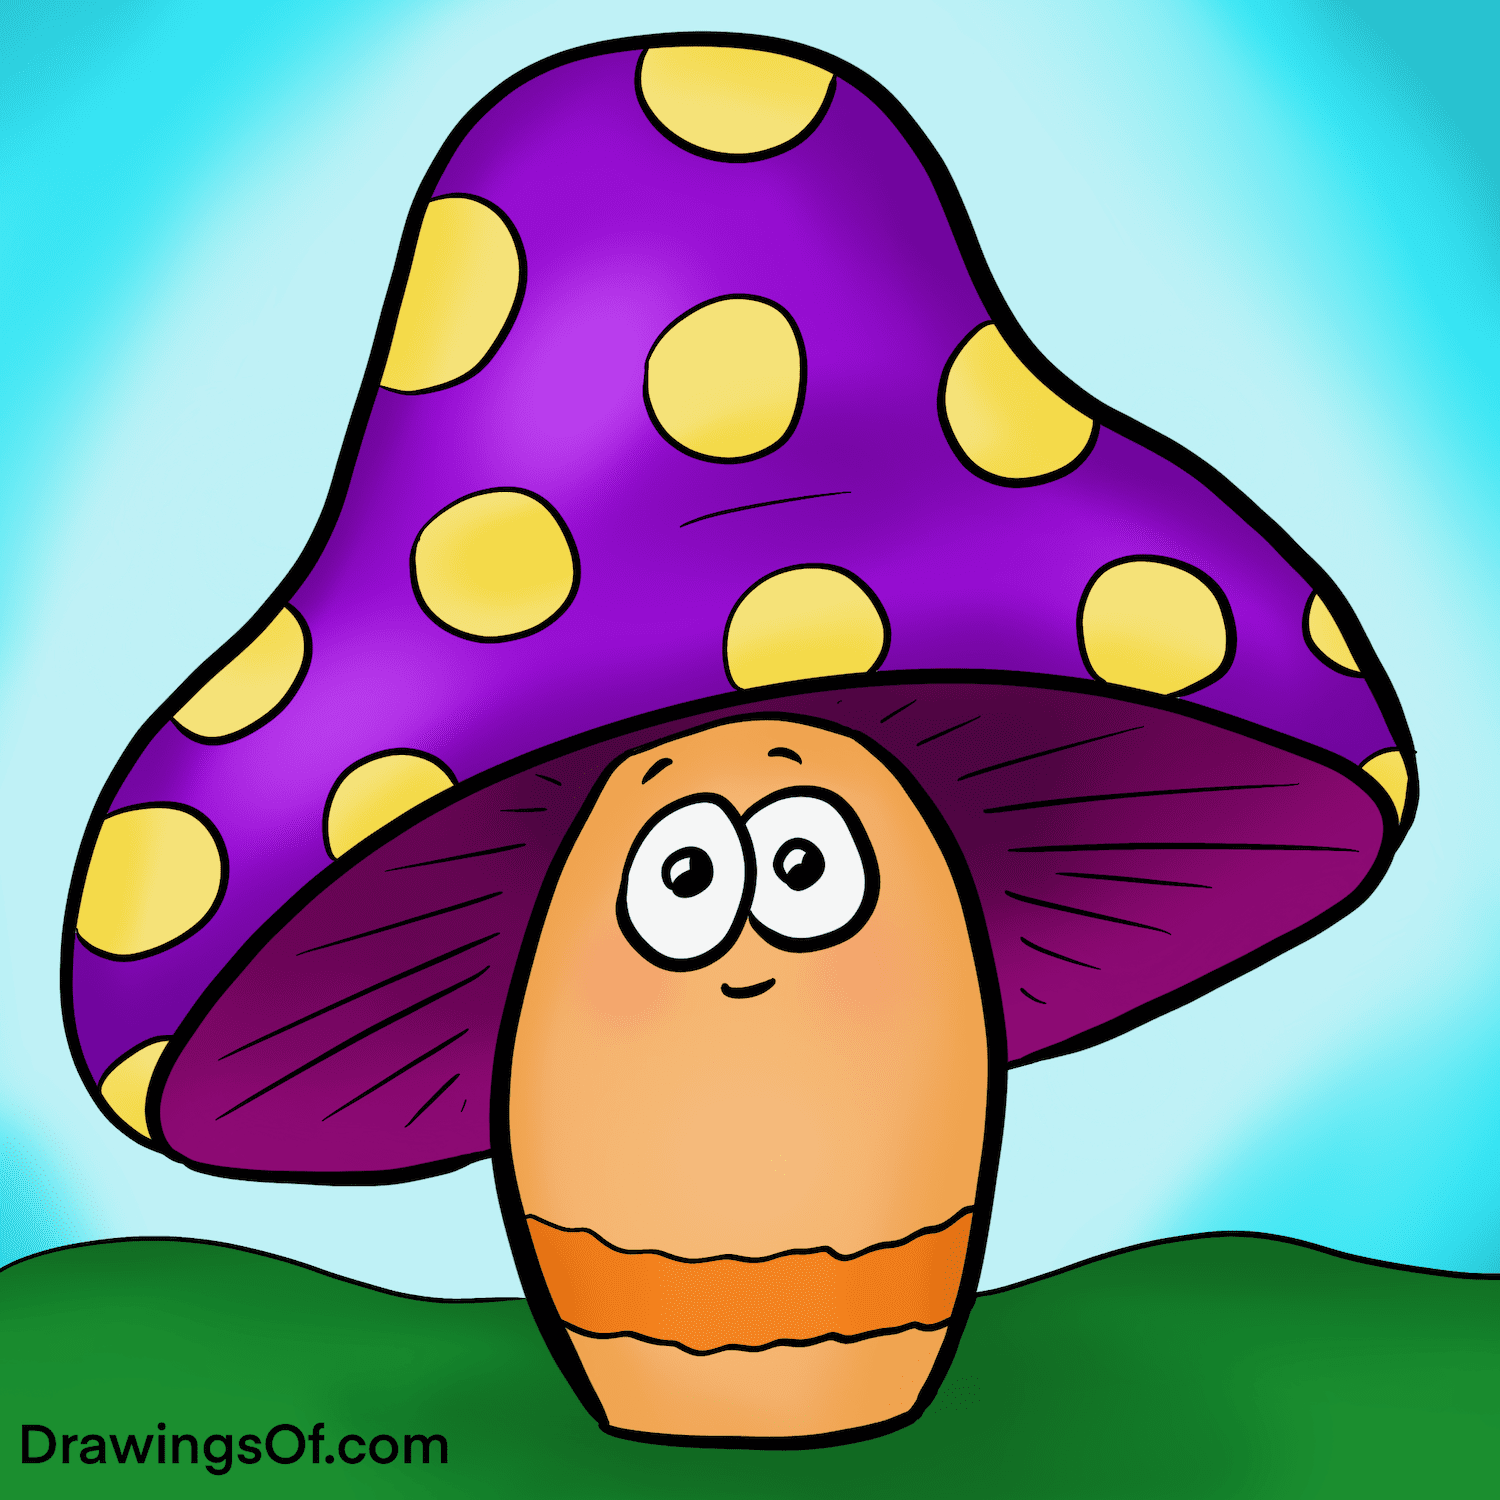 Mushroom Drawing Cute, Easy Instructions Drawings Of...